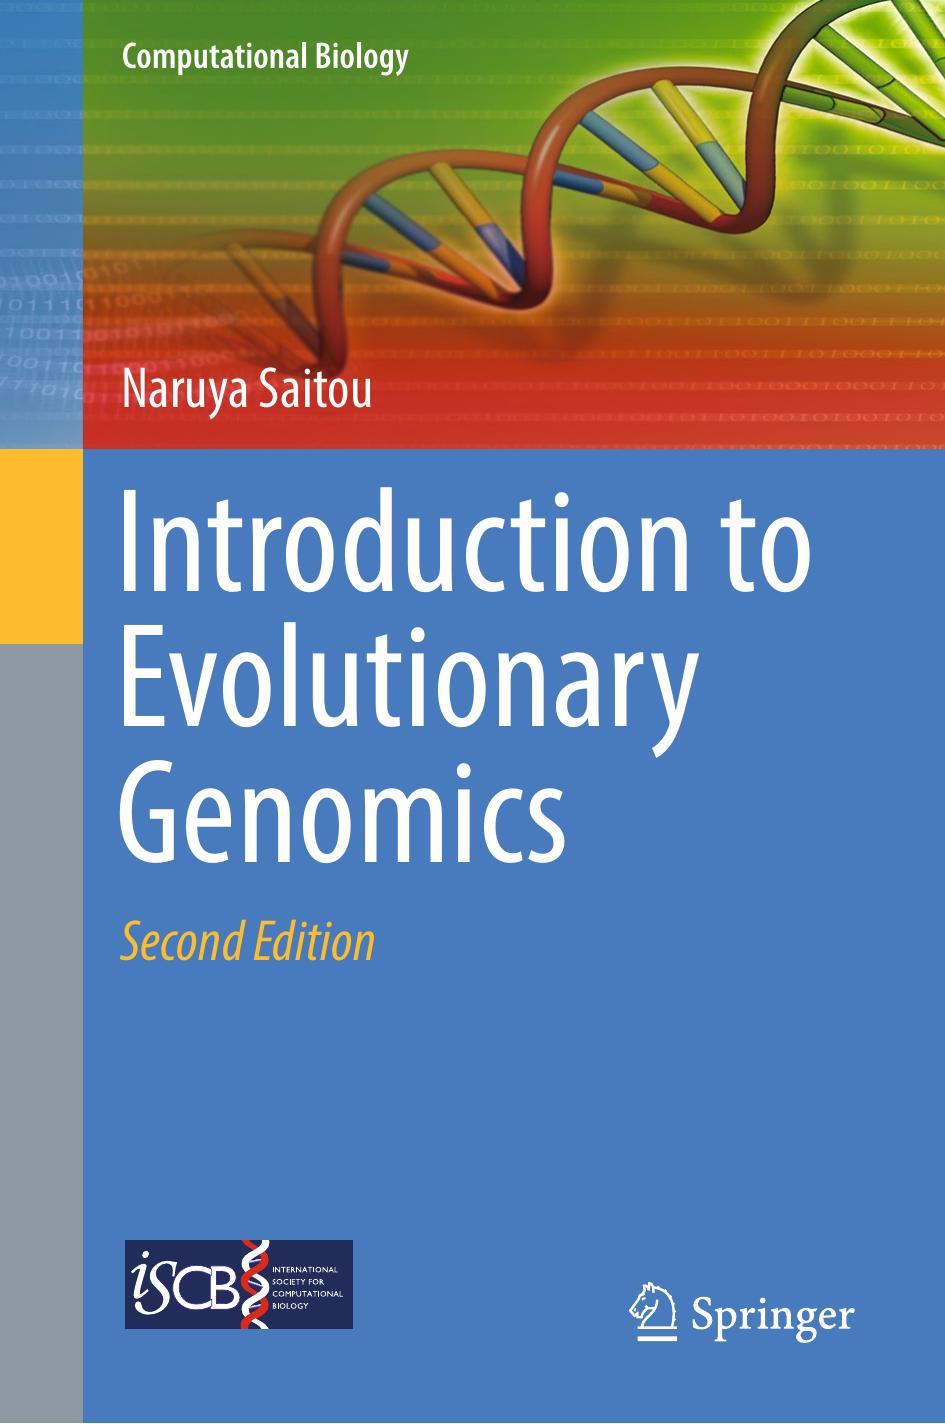 Introduction to Evolutionary Genomics by Naruya Saitou